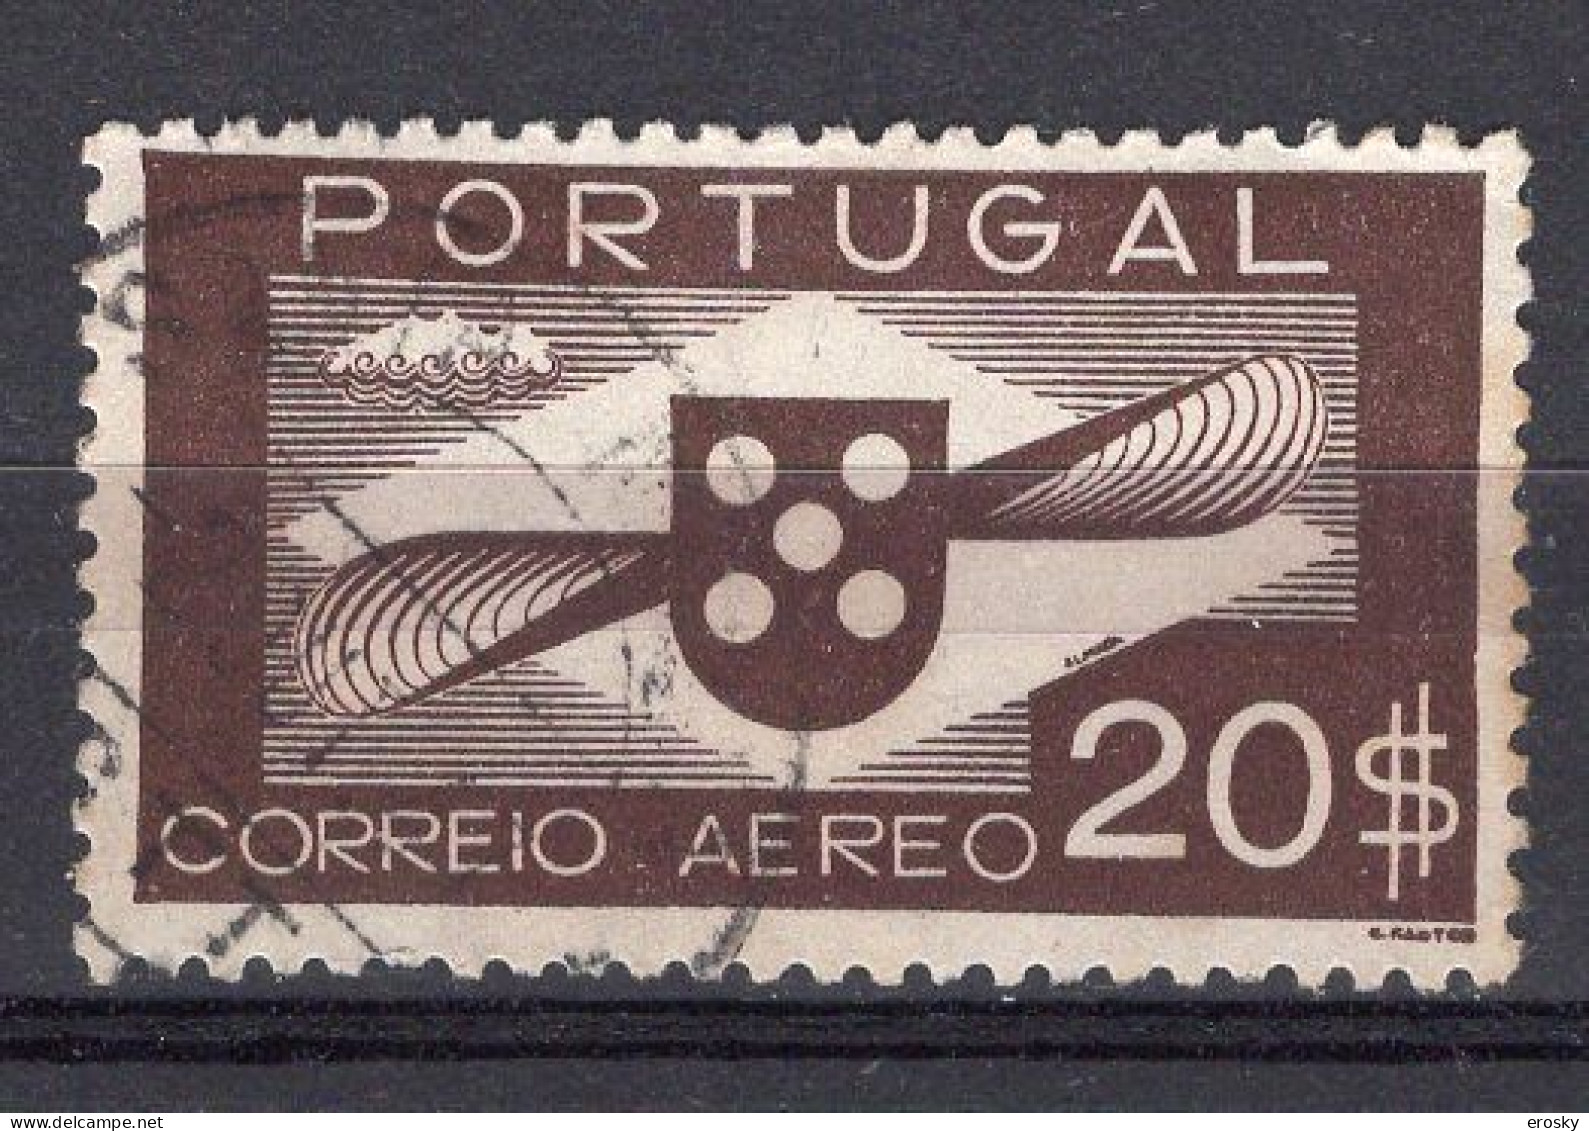 R5155 - PORTUGAL AERIENNE Yv N°9 - Usado